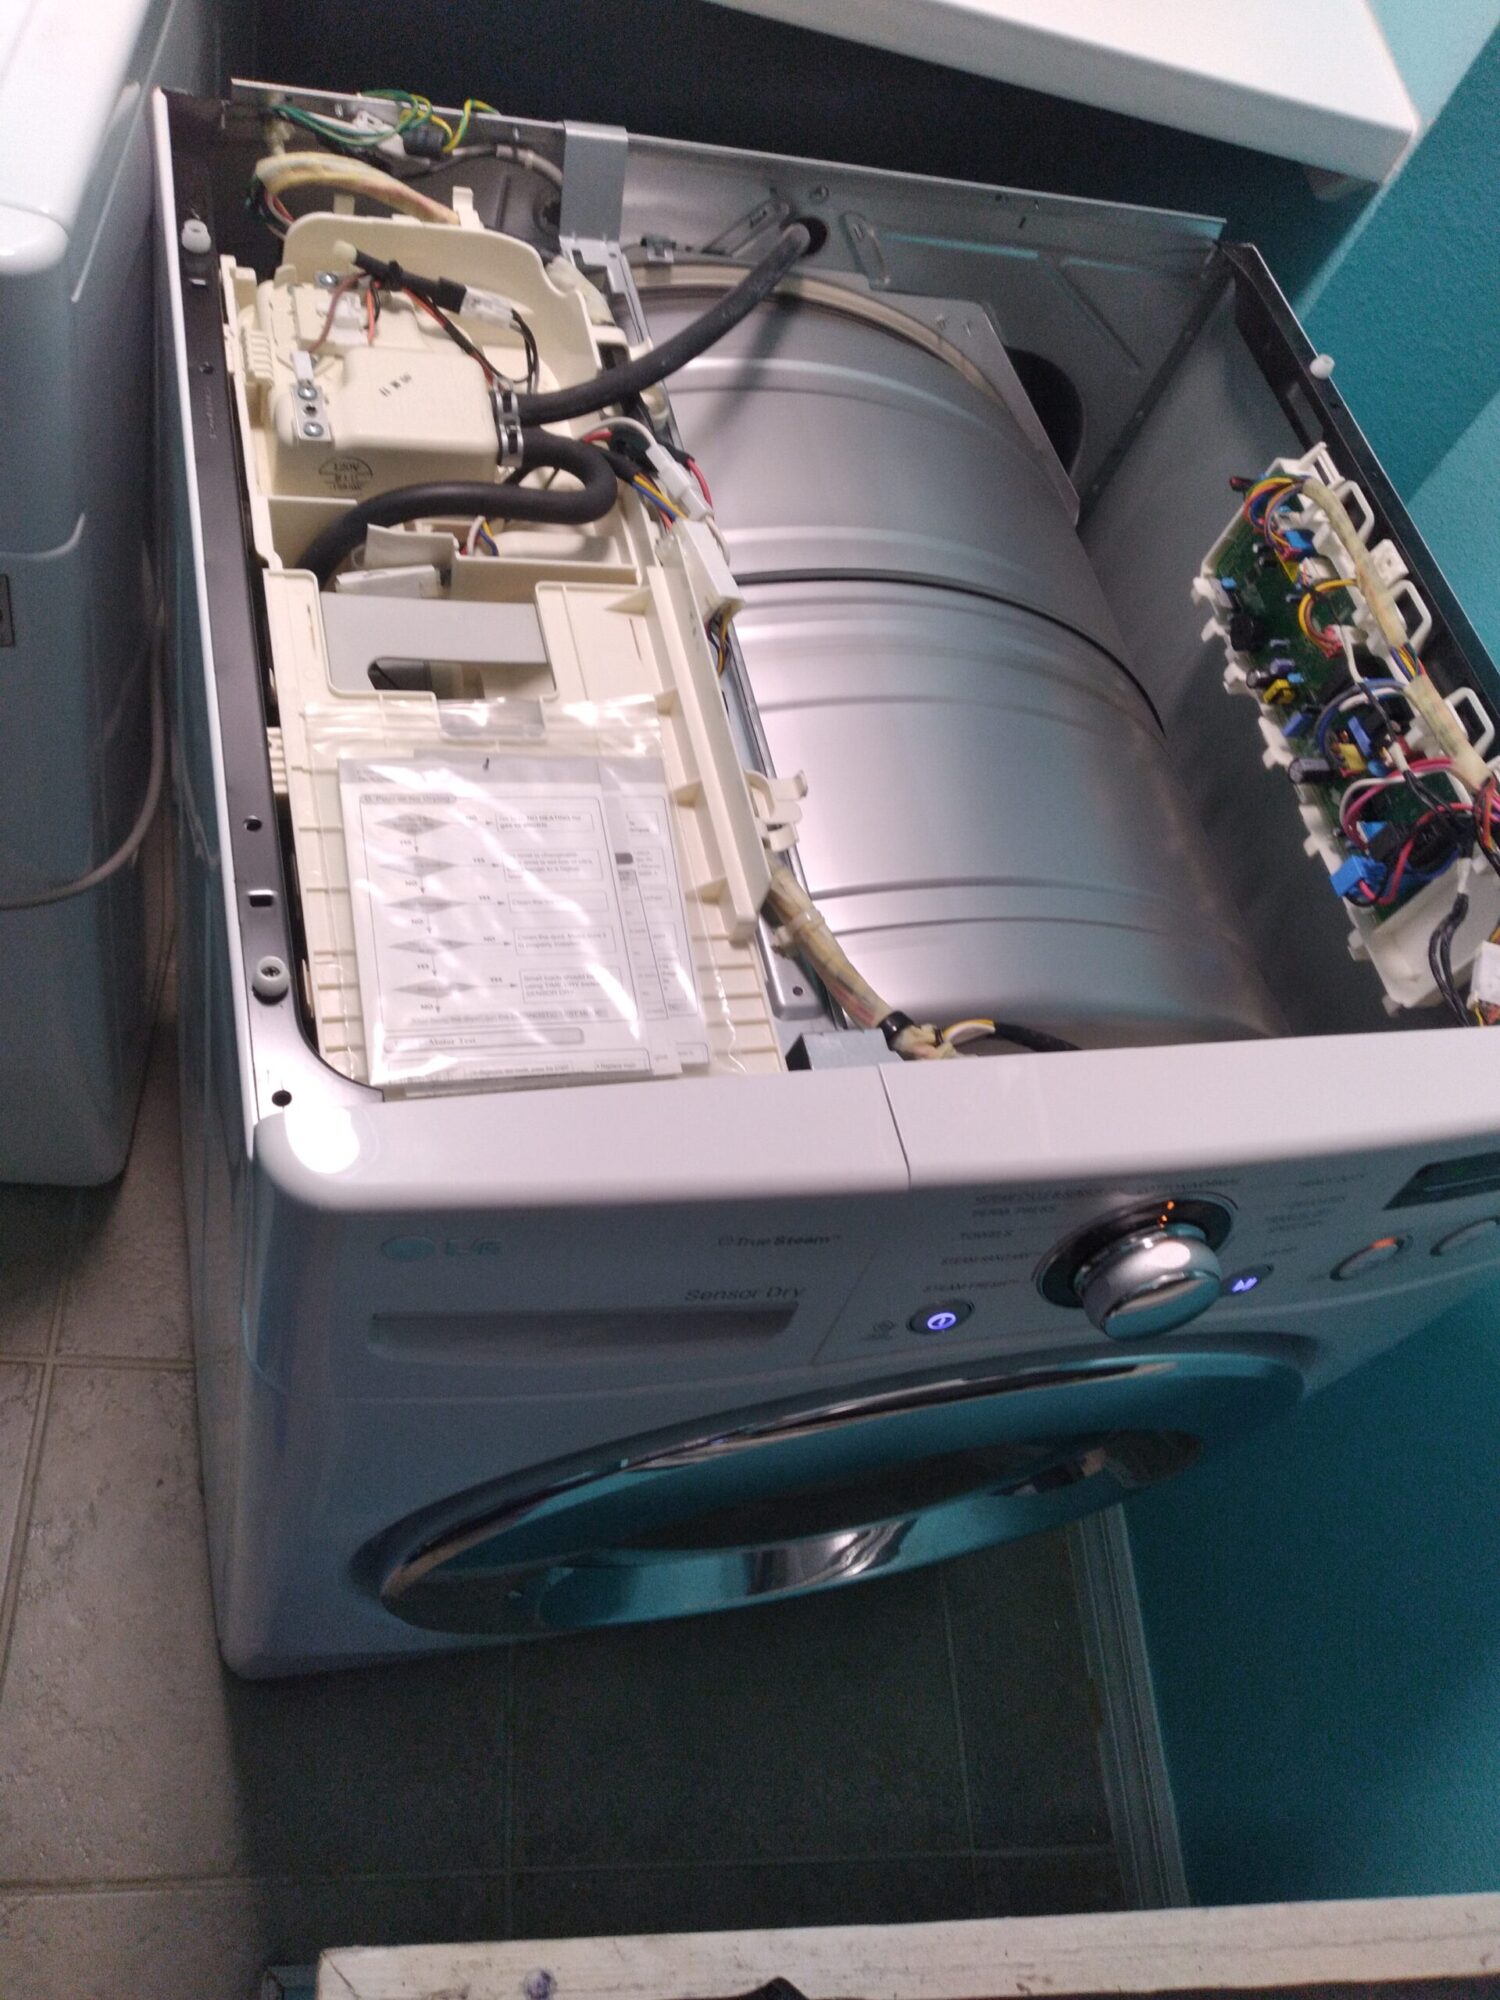 appliance repair dryer repair gas dryer not heating ne 19th ct ocala fl 34470